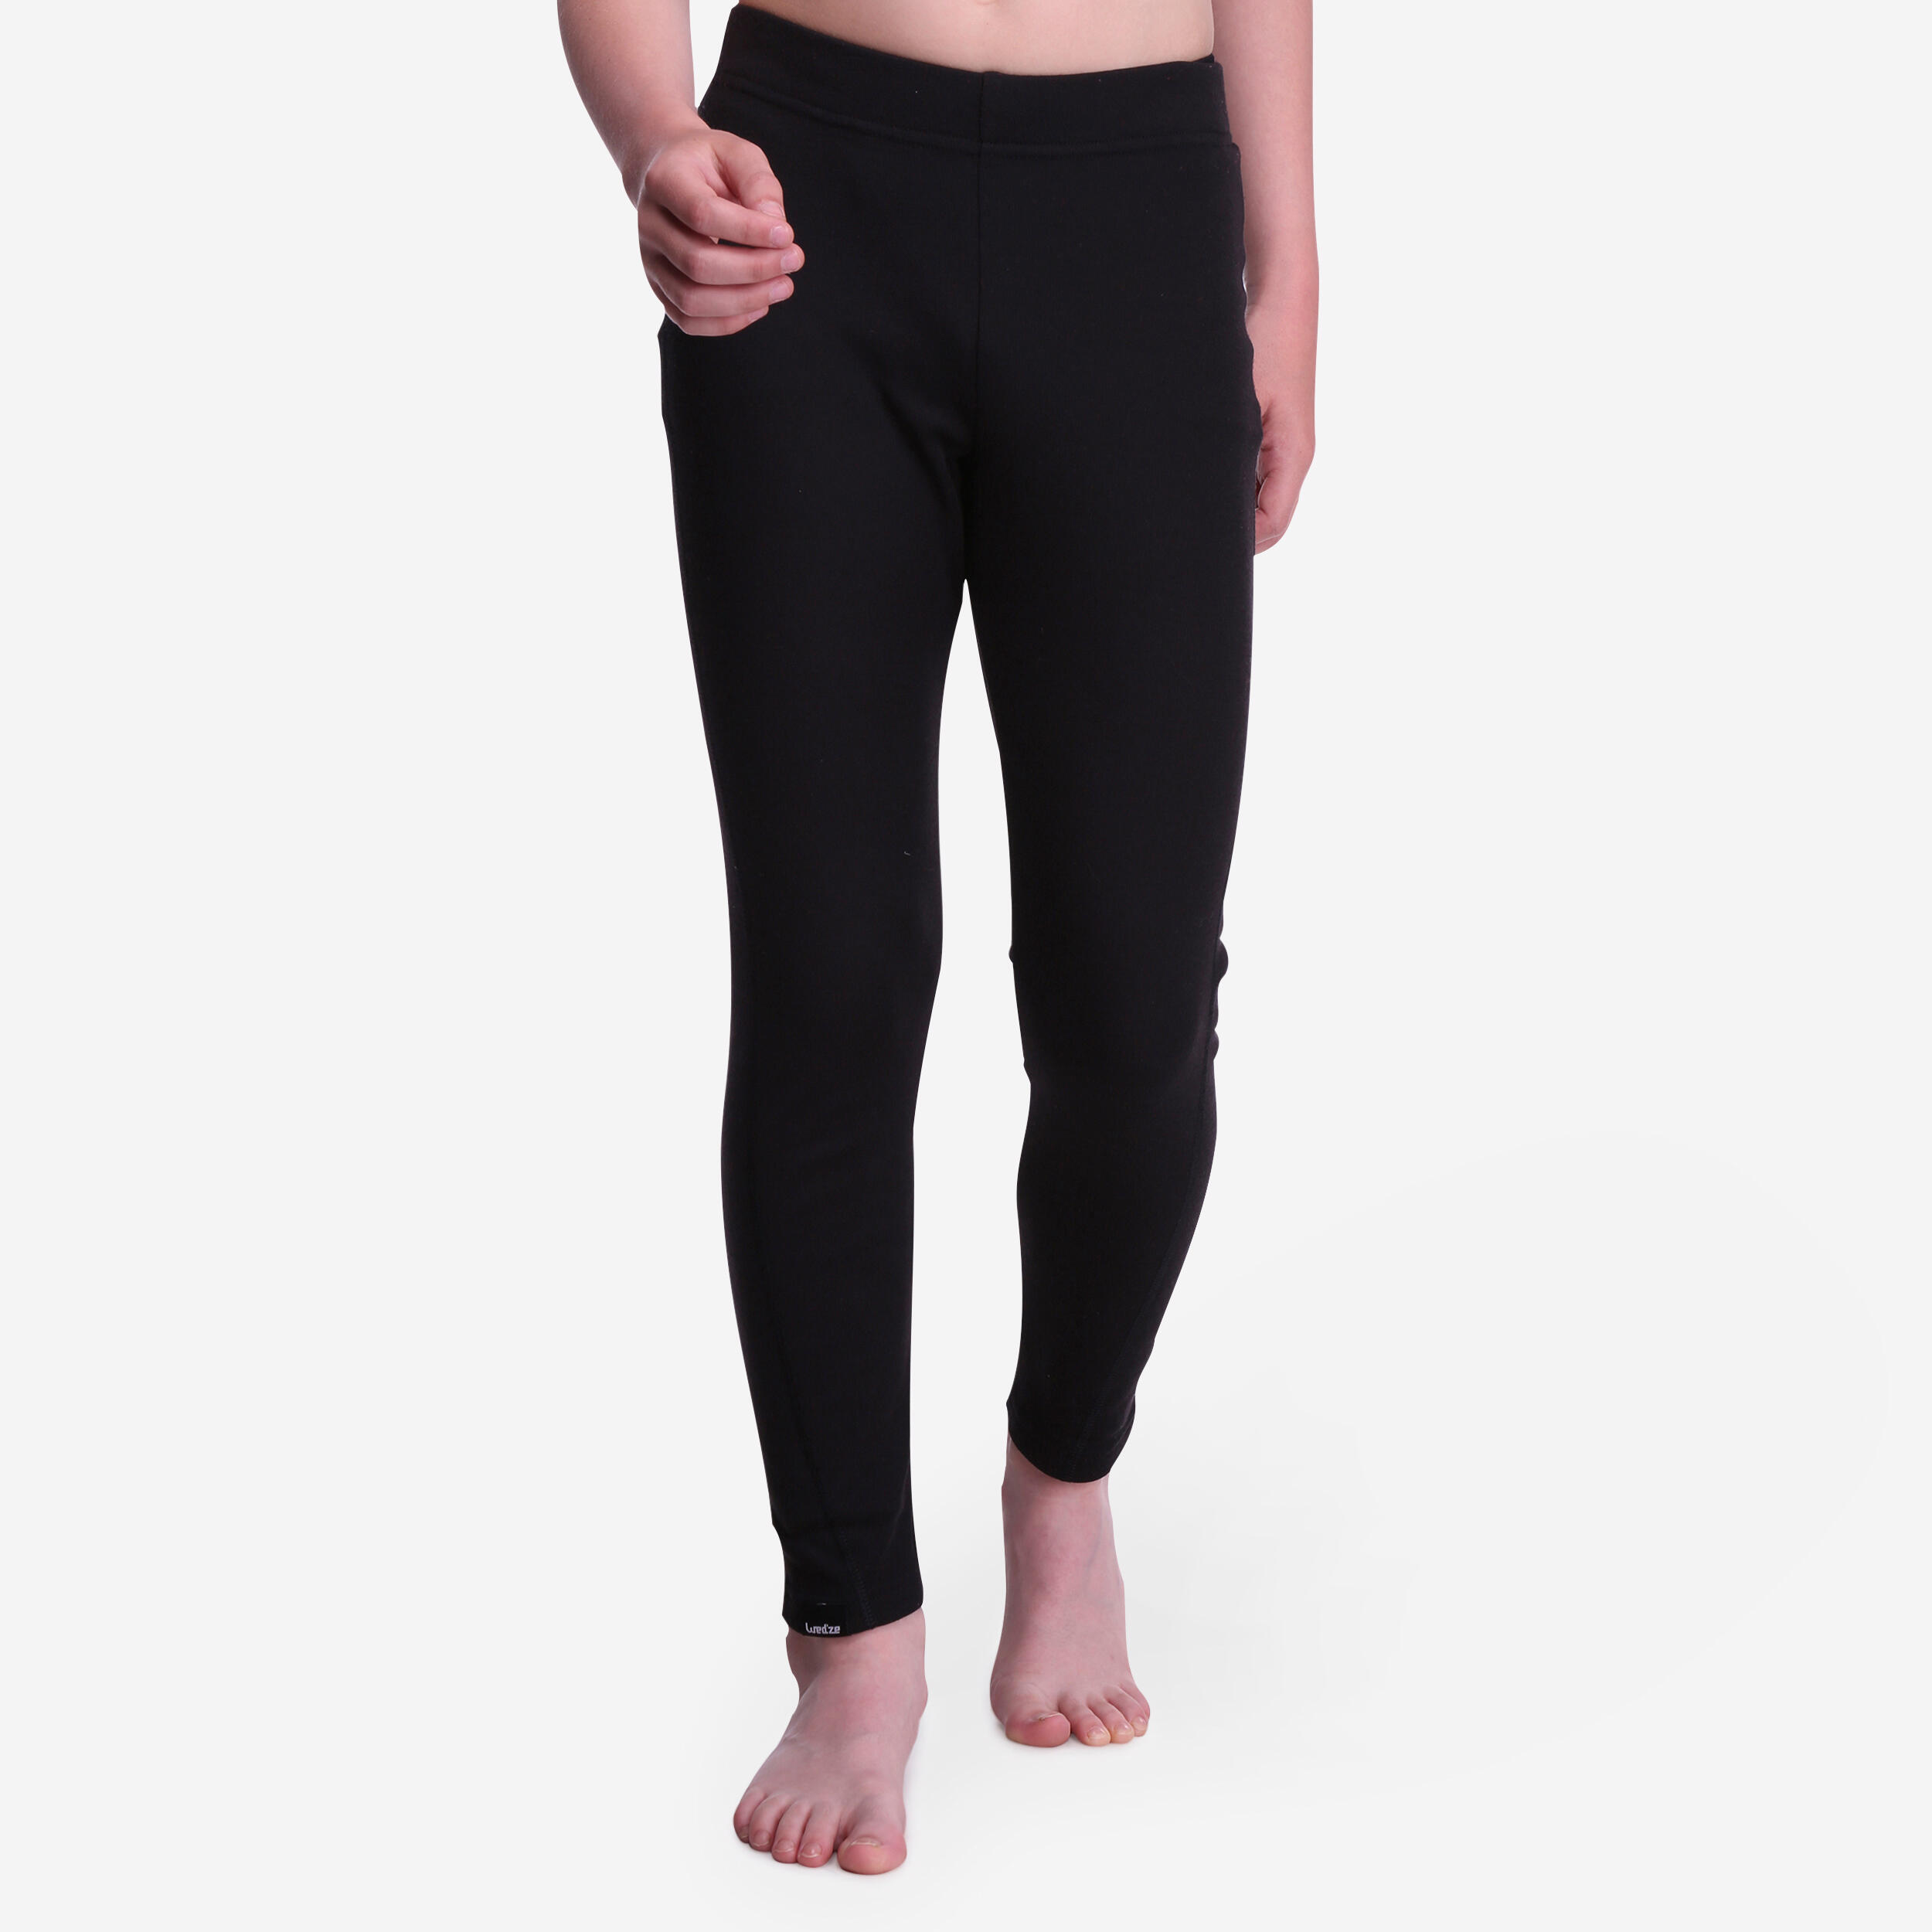 Buy Ezee Sleeves Boys/Kids Slim Fit Casual Lycra Pants/Trousers - Pack of 2  (Black,Baby Pink) at Amazon.in